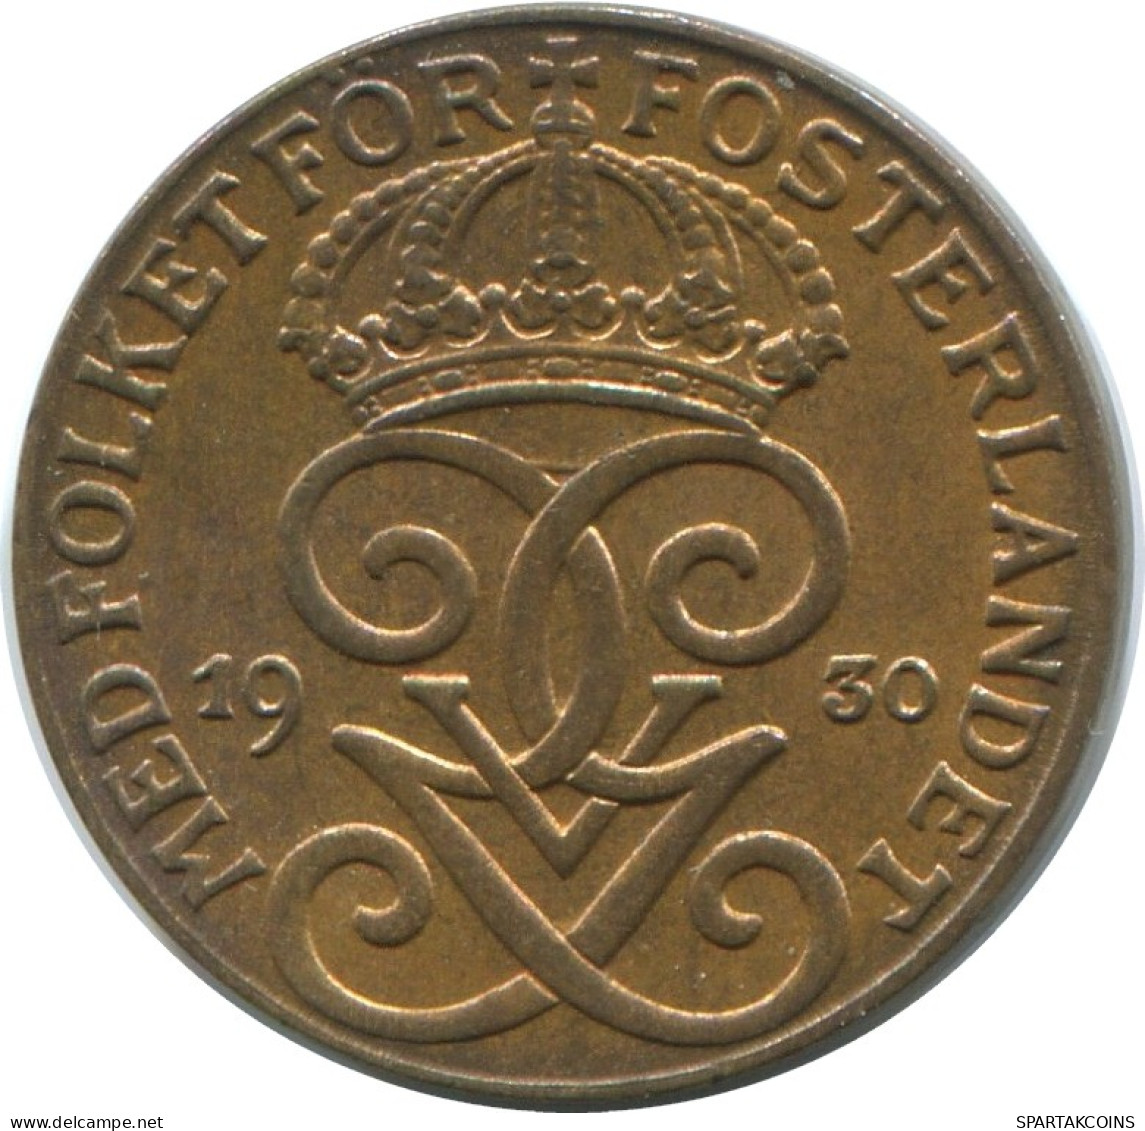 1 ORE 1930 SWEDEN Coin #AD340.2.U.A - Sweden